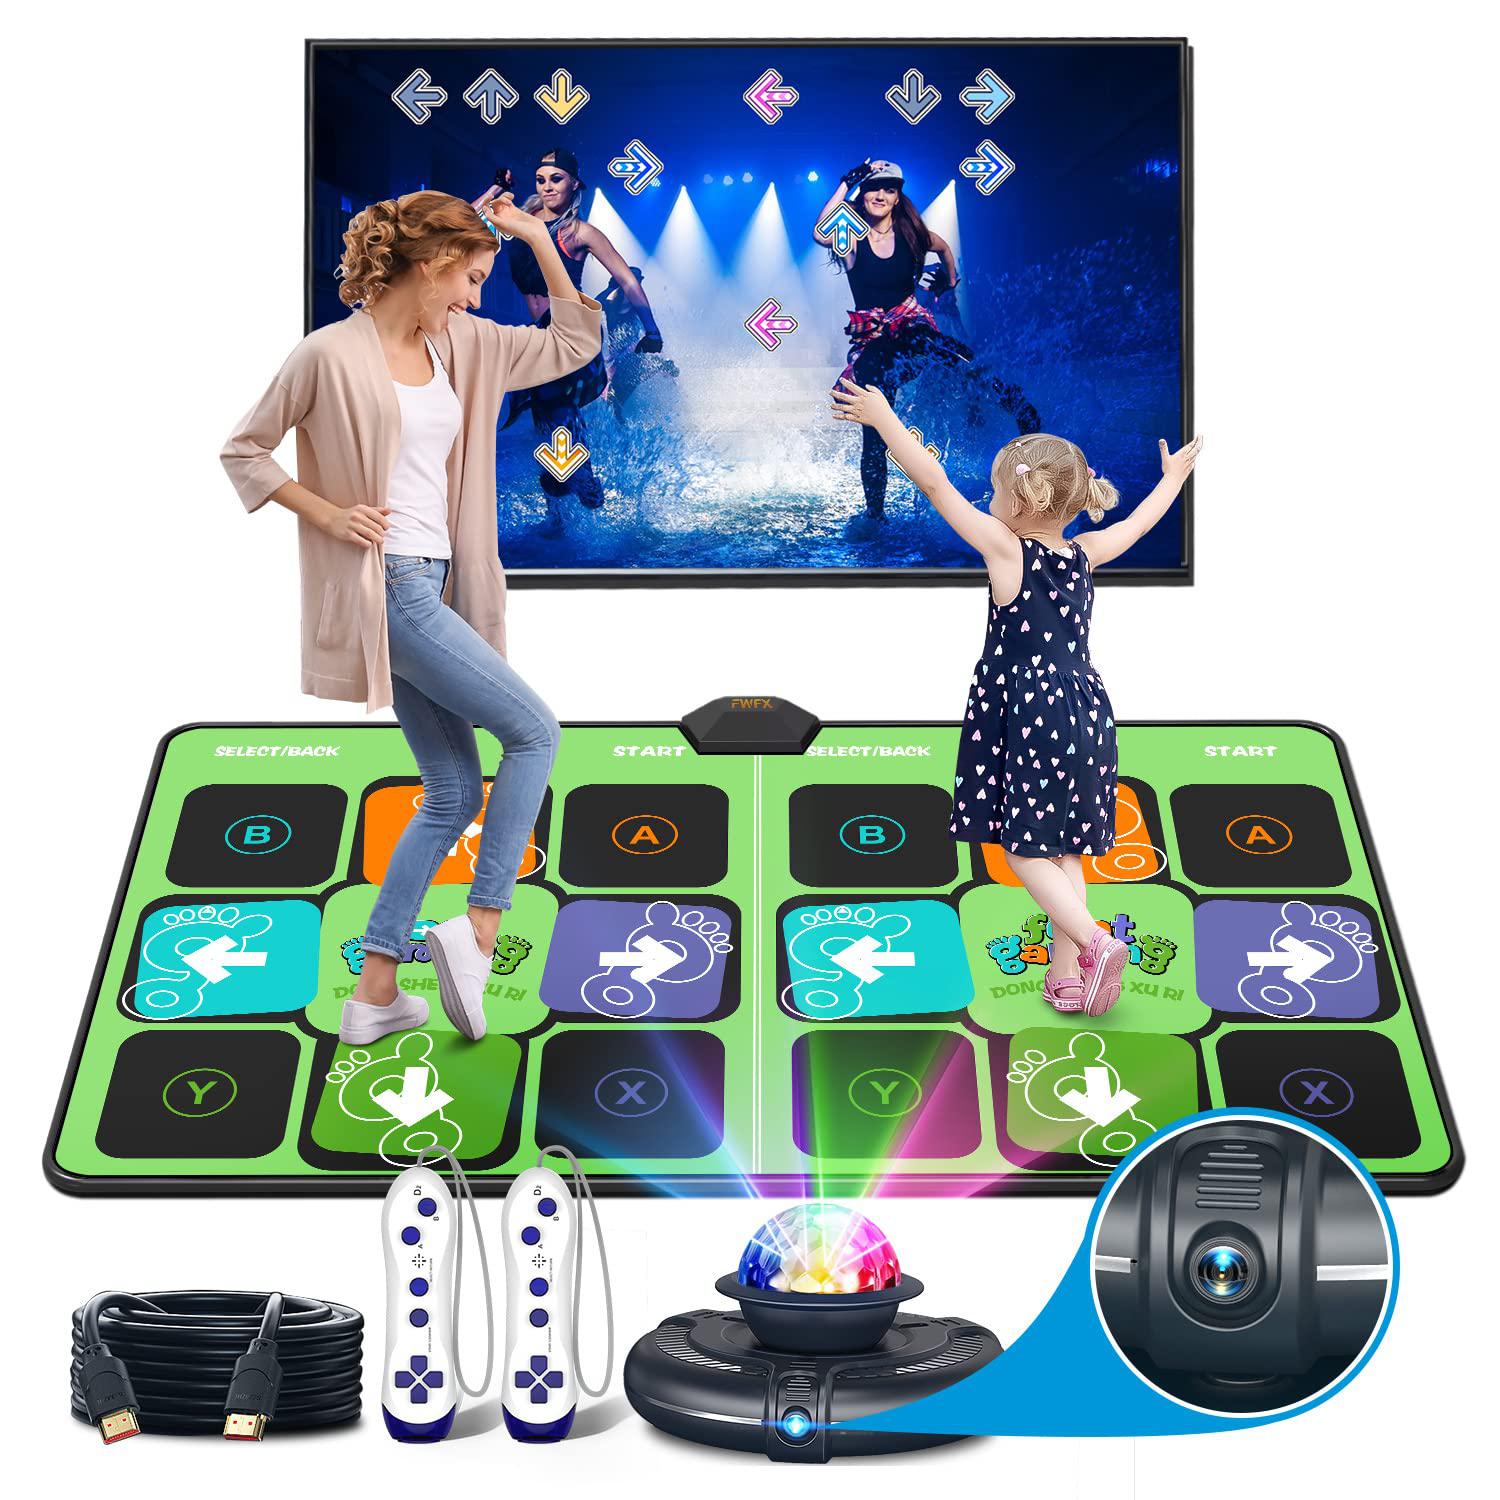 fwfx electronic dance mats - dance mat double game for kids and adults, wireless musical dancing mat (green, 36.6" x65.4")